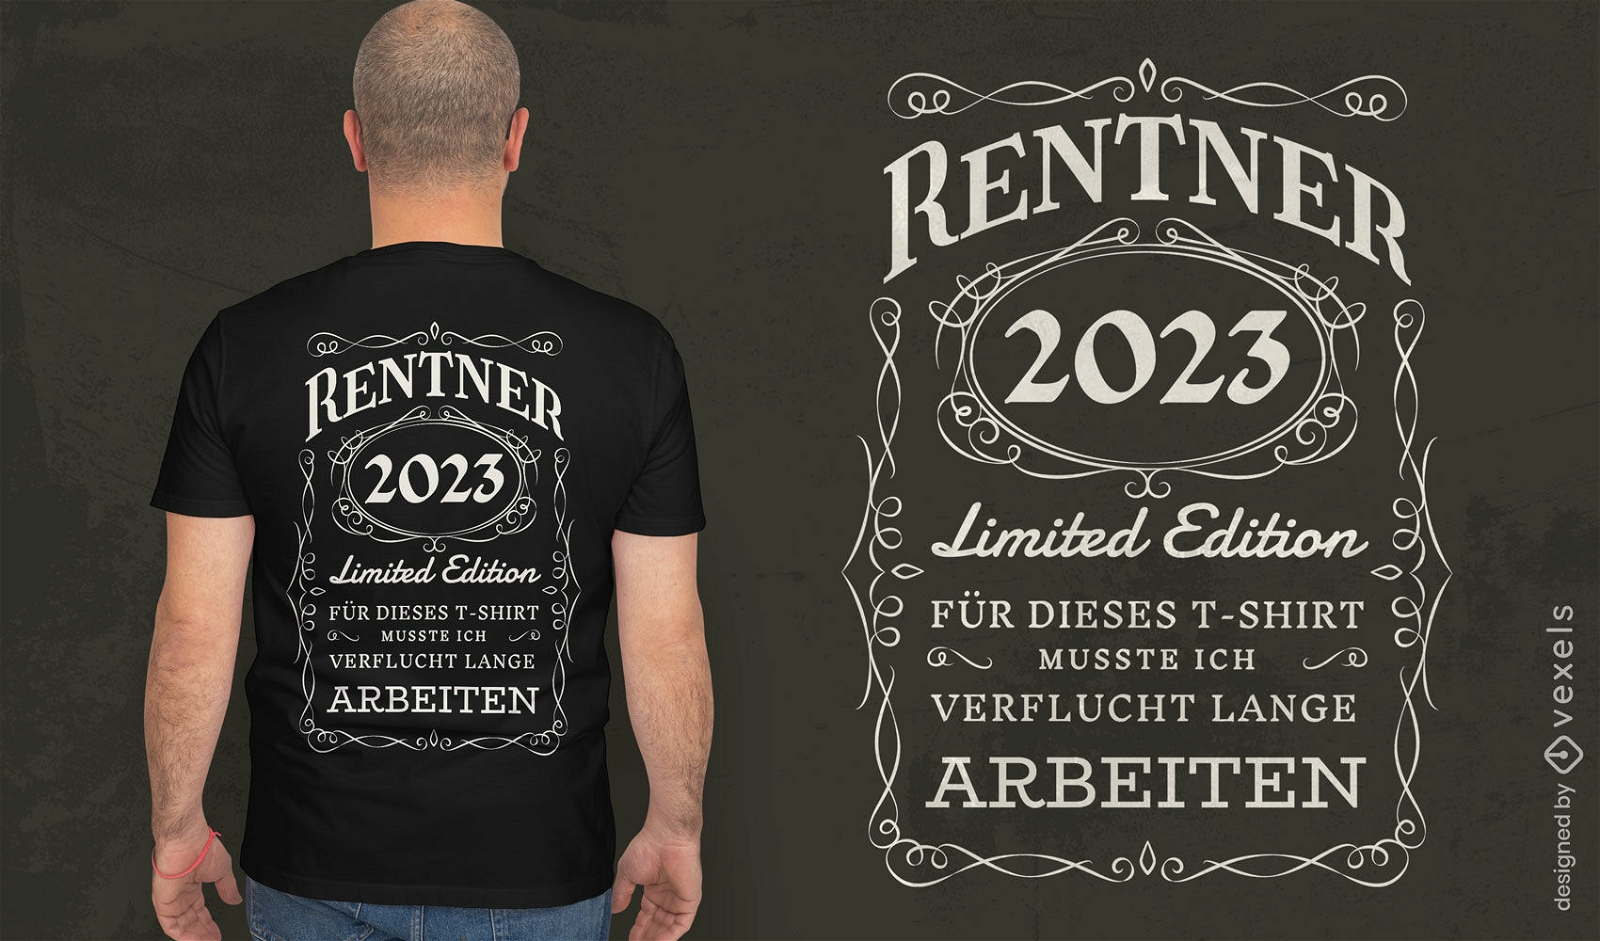 Dise?o de camiseta de cita vintage de jubilaci?n 2023